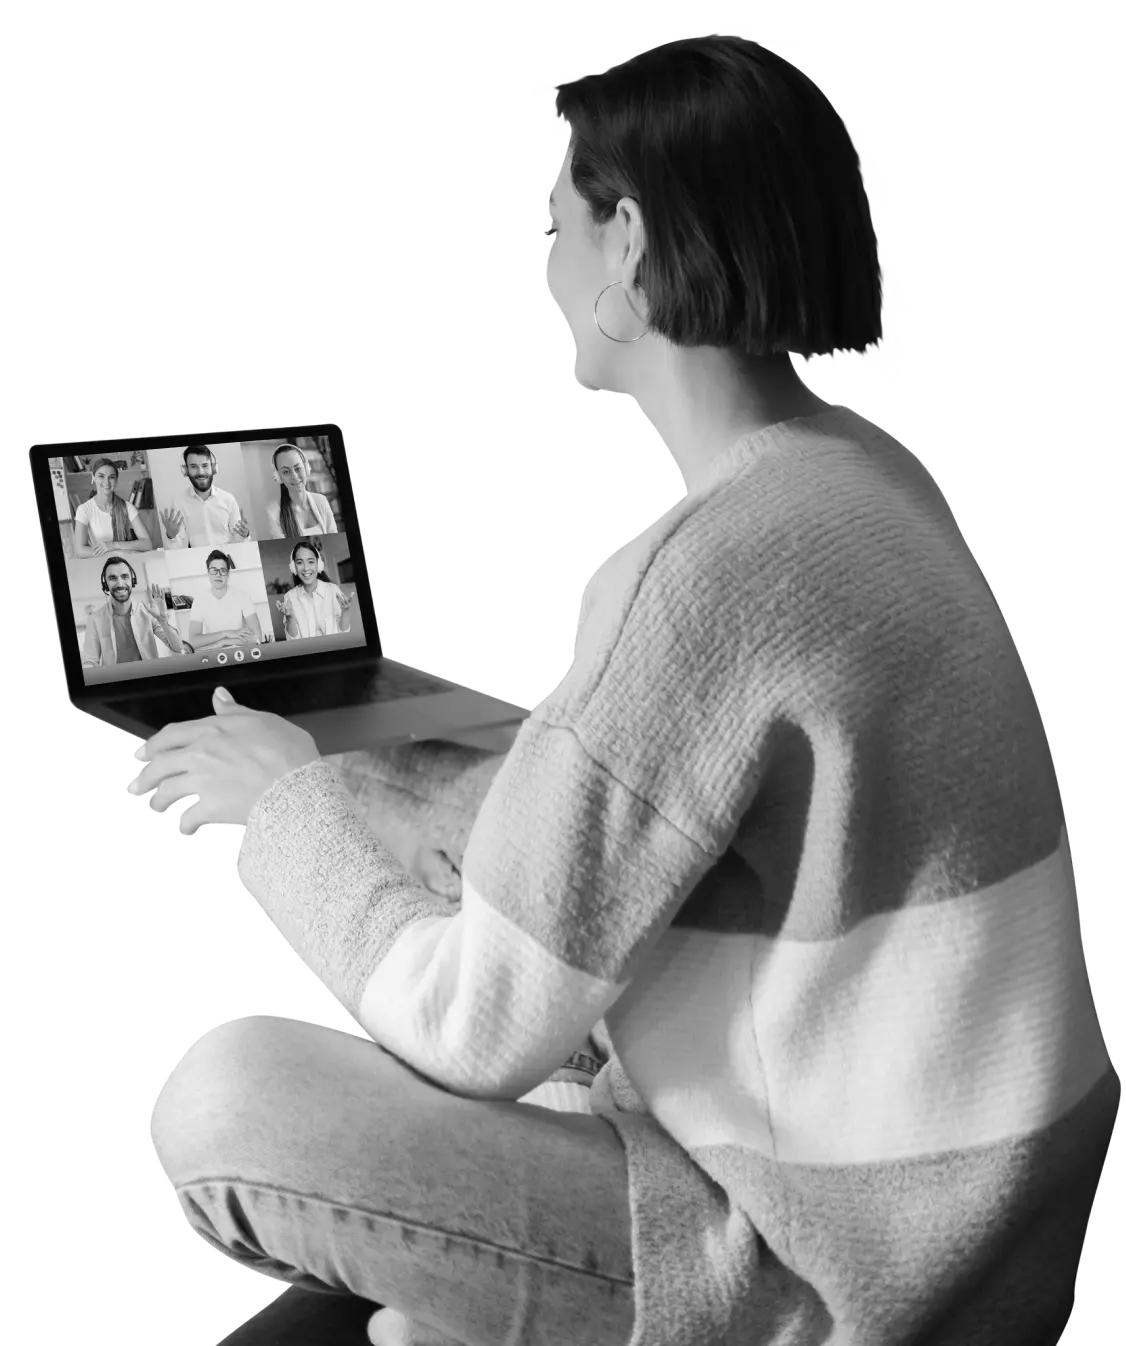 Chica tomando videoconferencias desde su computadora portatil